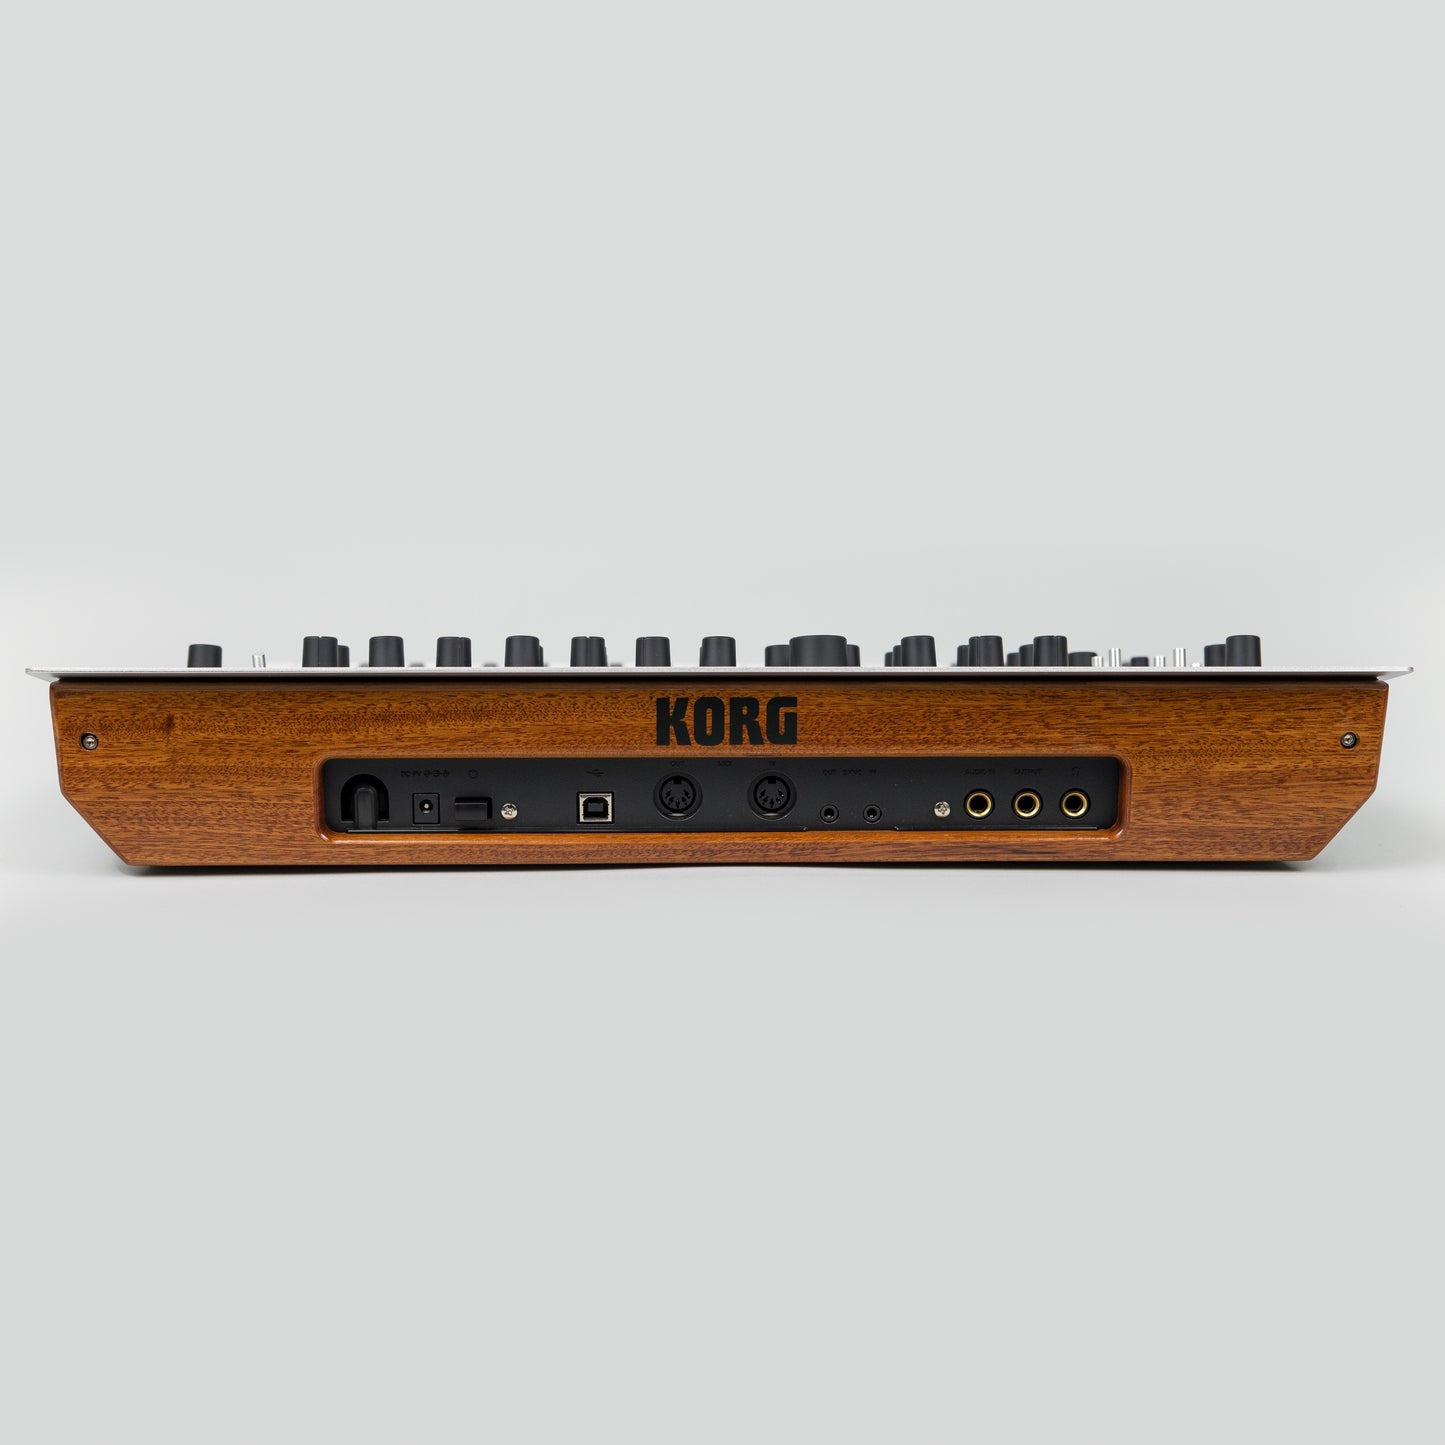 Korg Minilogue Polyphonic Analogue Synthesizer